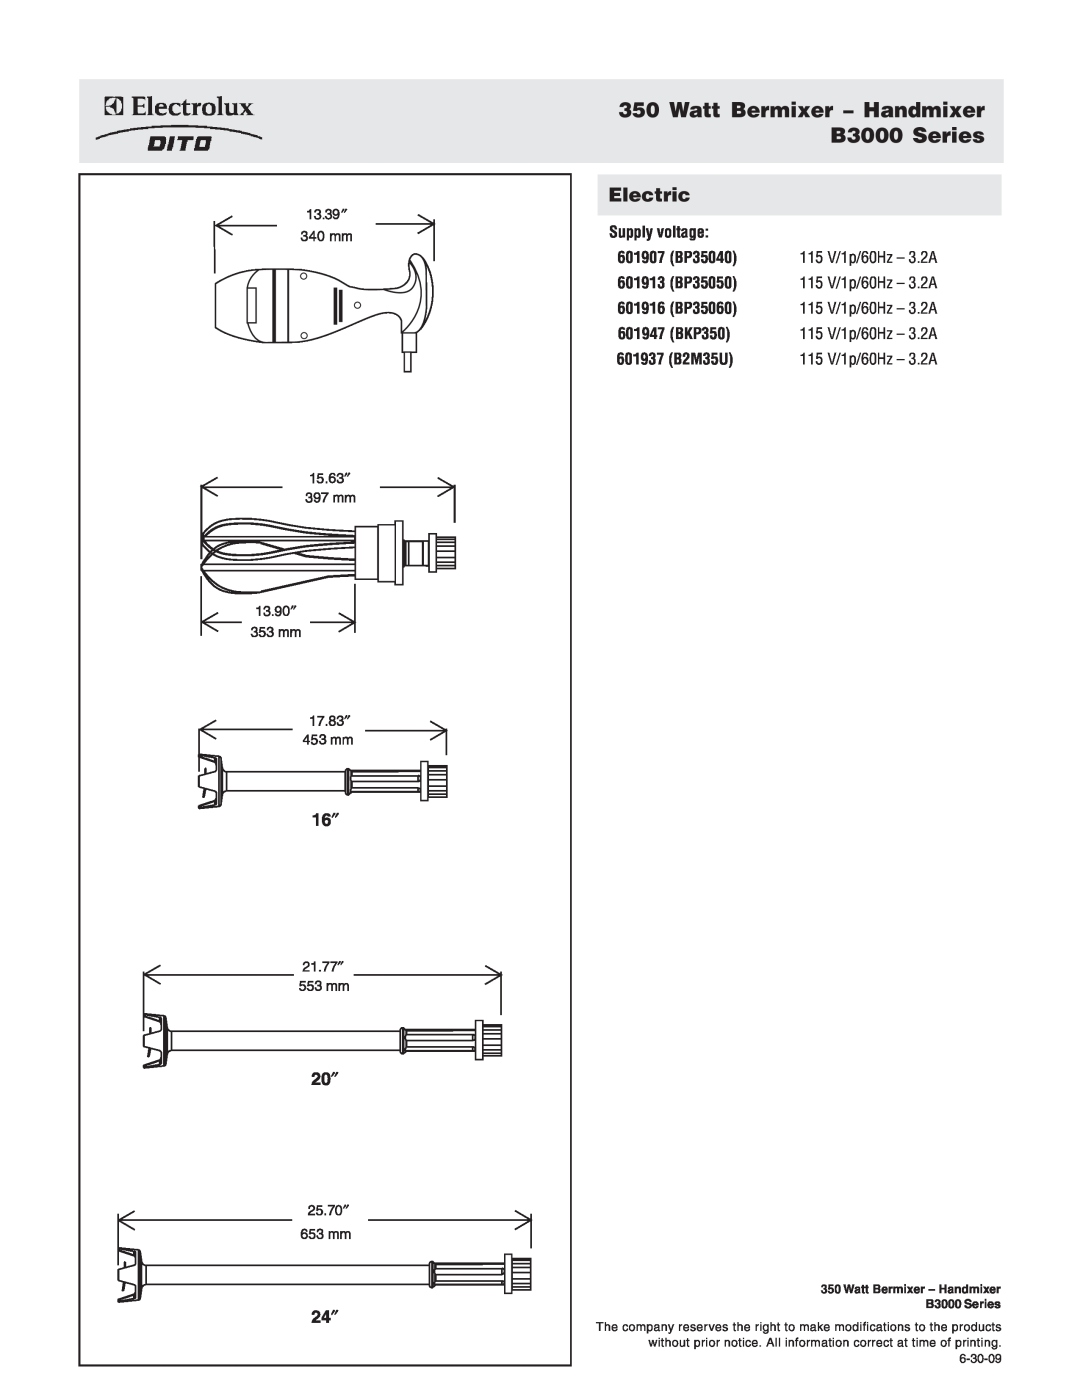 Electrolux Watt Bermixer - Handmixer B3000 Series, Supply voltage, 601907 BP35040, 601913 BP35050, 601916 BP35060 